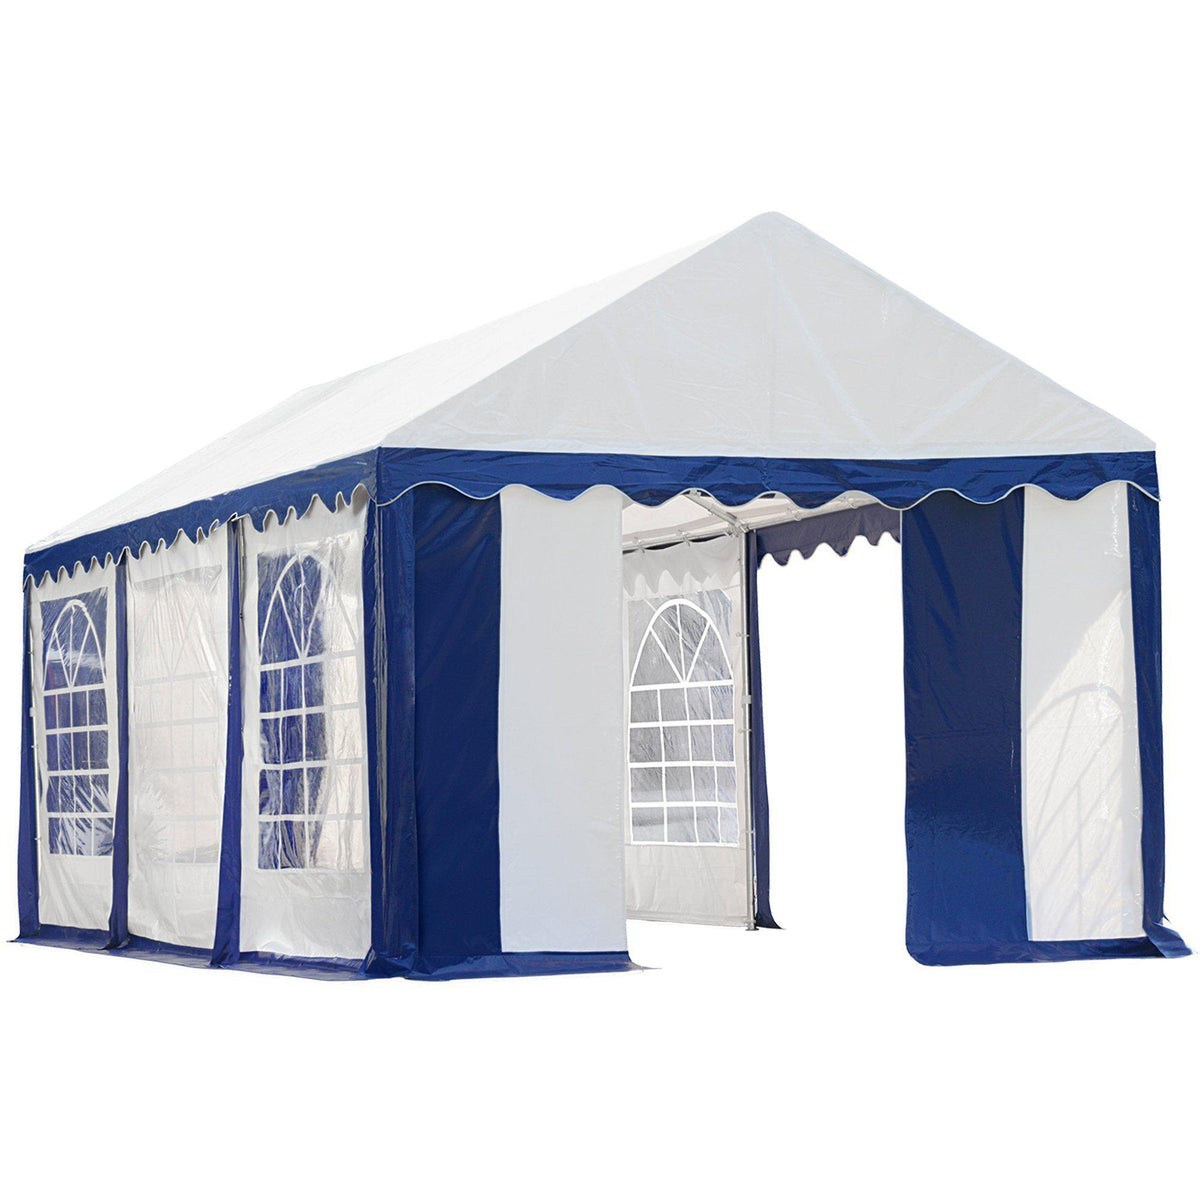 ShelterLogic Party Tent with Enclosure Kit, Blue/White, 10 x 20 ft.